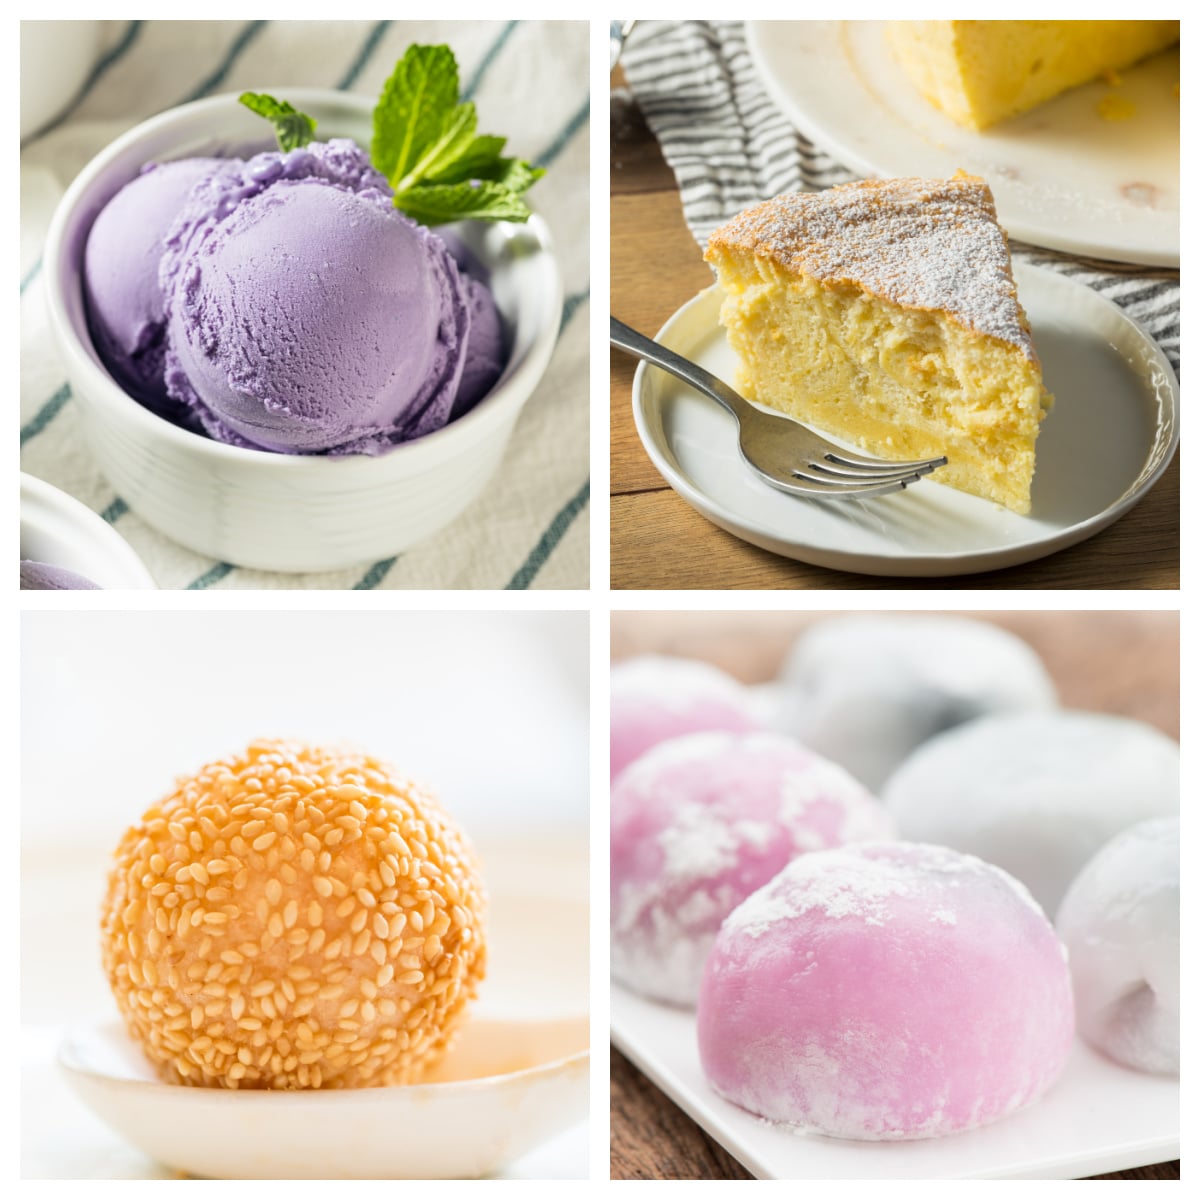 Ice Cream and Desserts